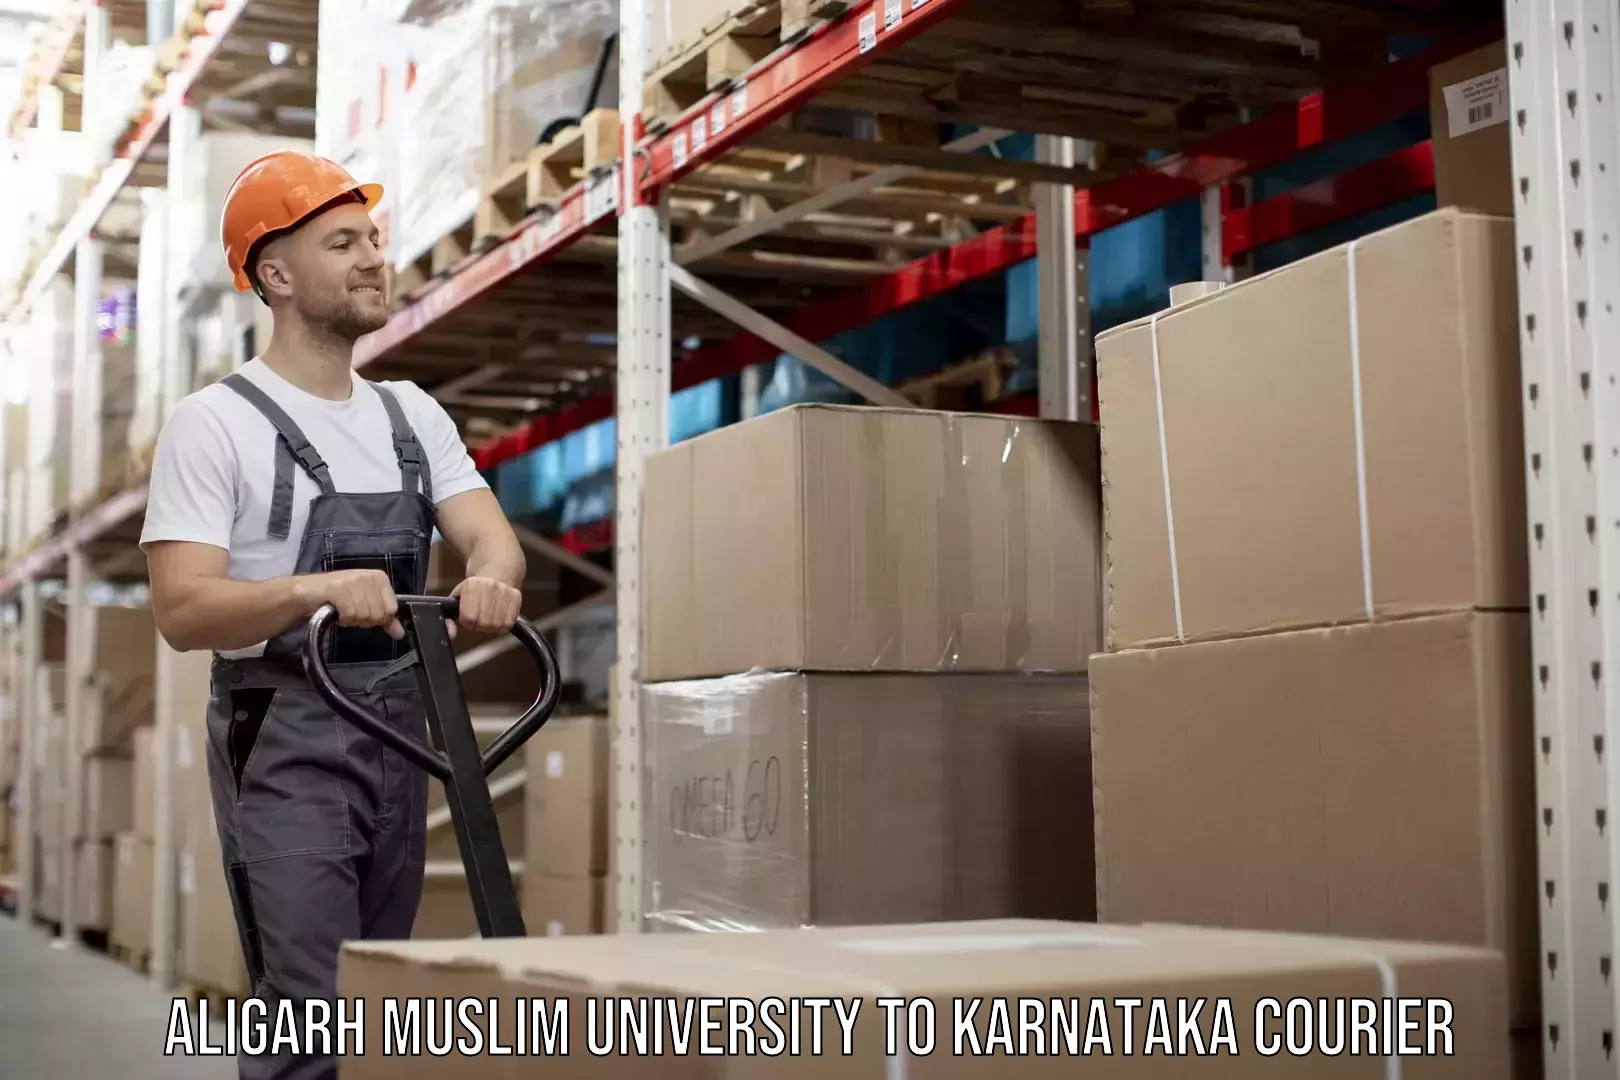 Ocean freight courier Aligarh Muslim University to Karnataka